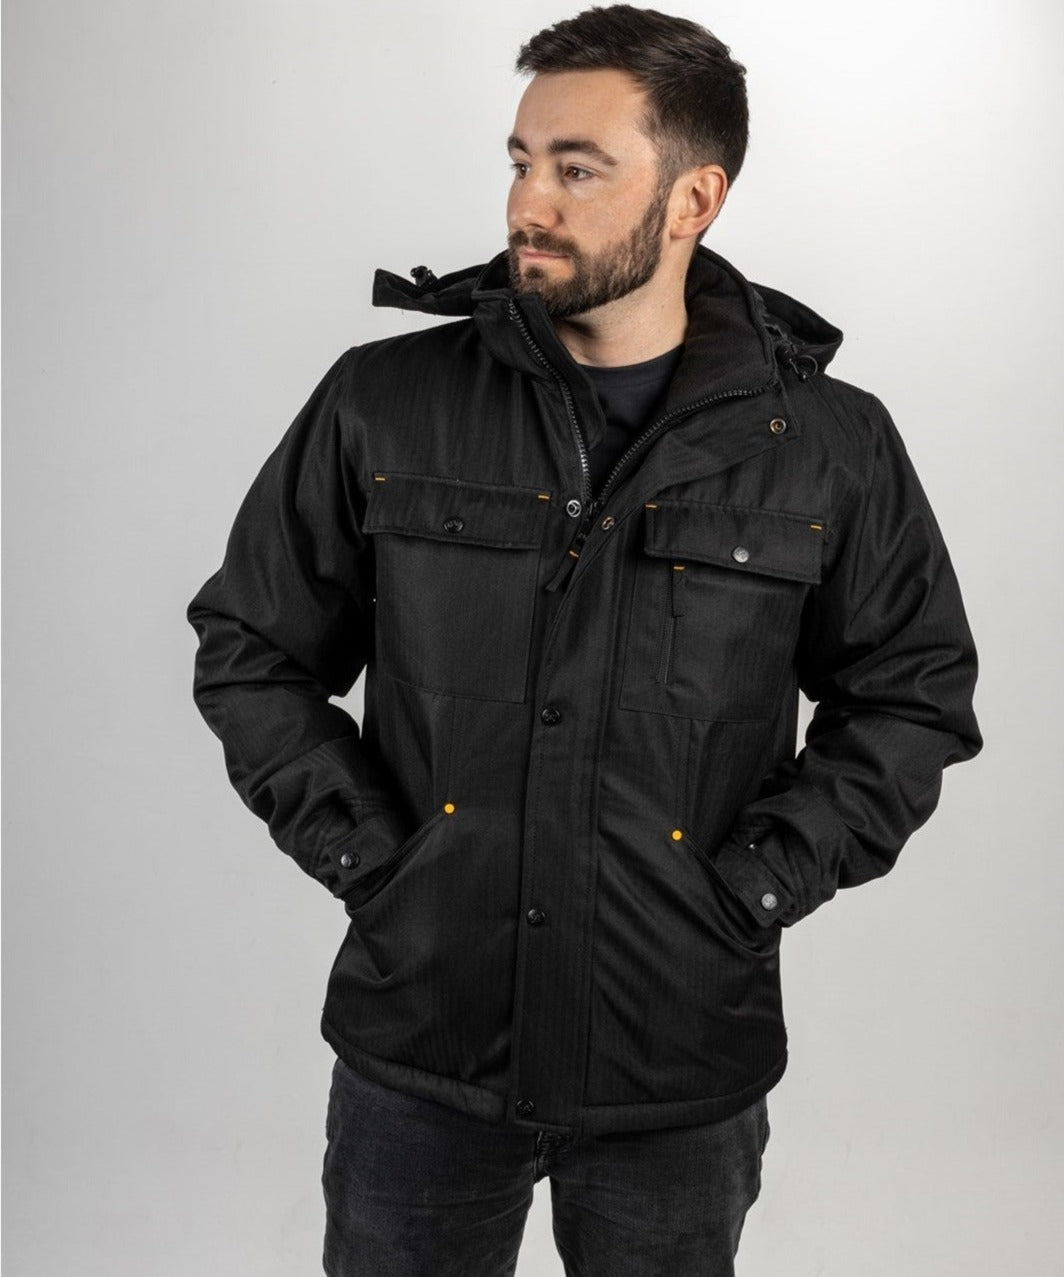 Caterpillar Stealth Insulated Workwear Jacket in Black 